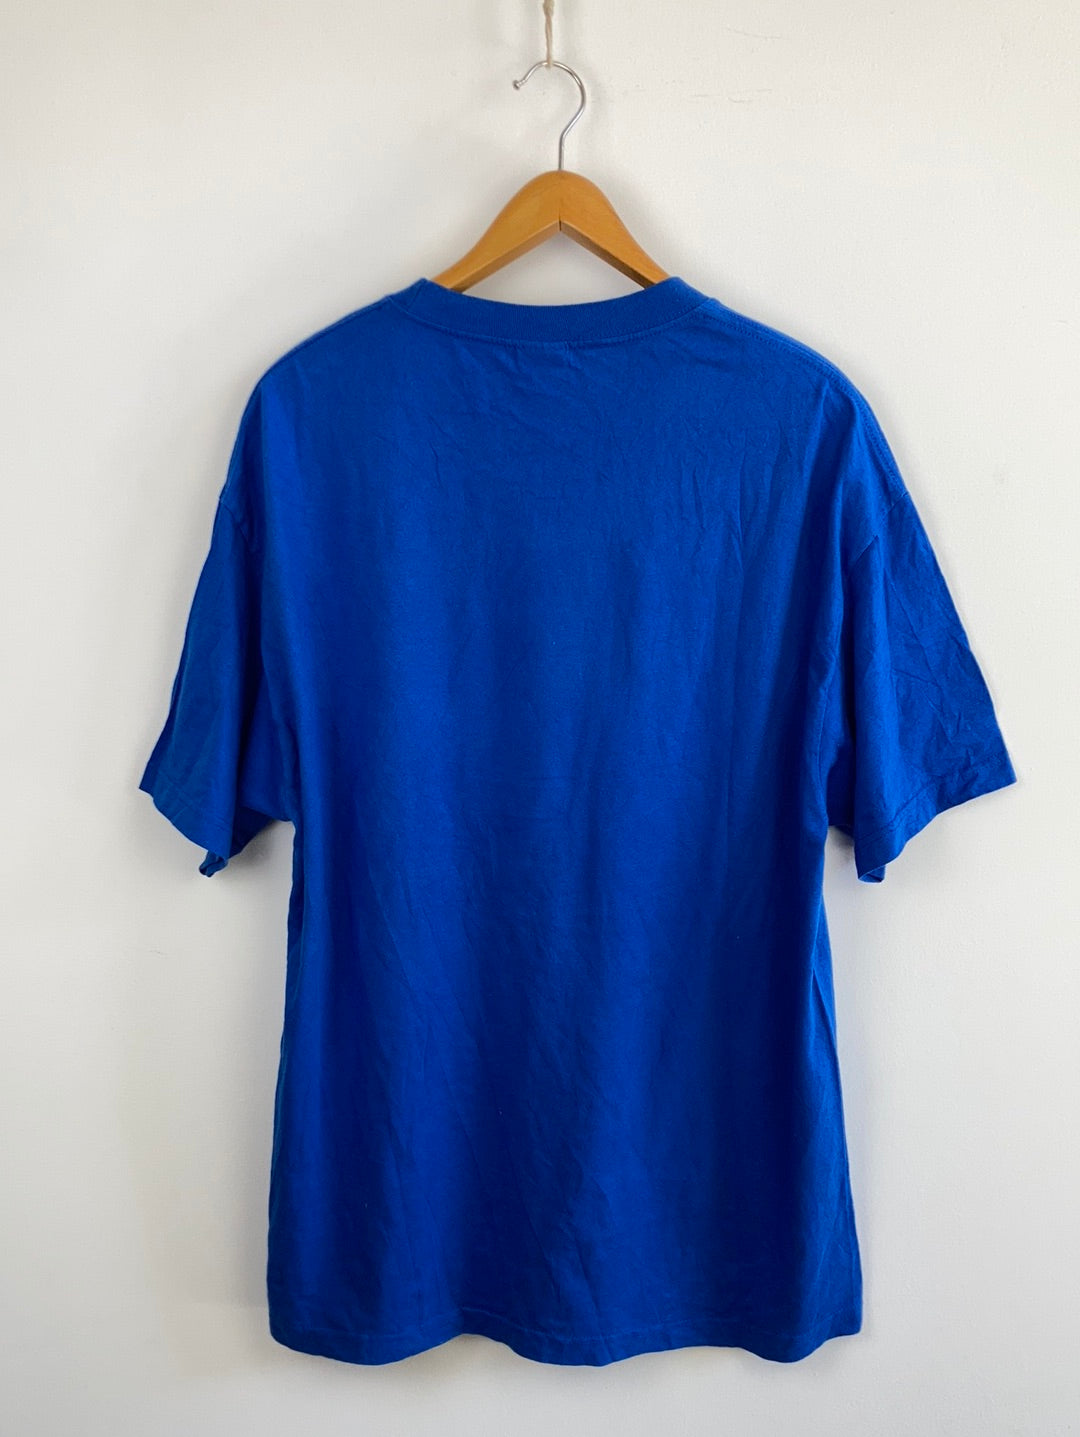 Kellogg's T-Shirt (XL)